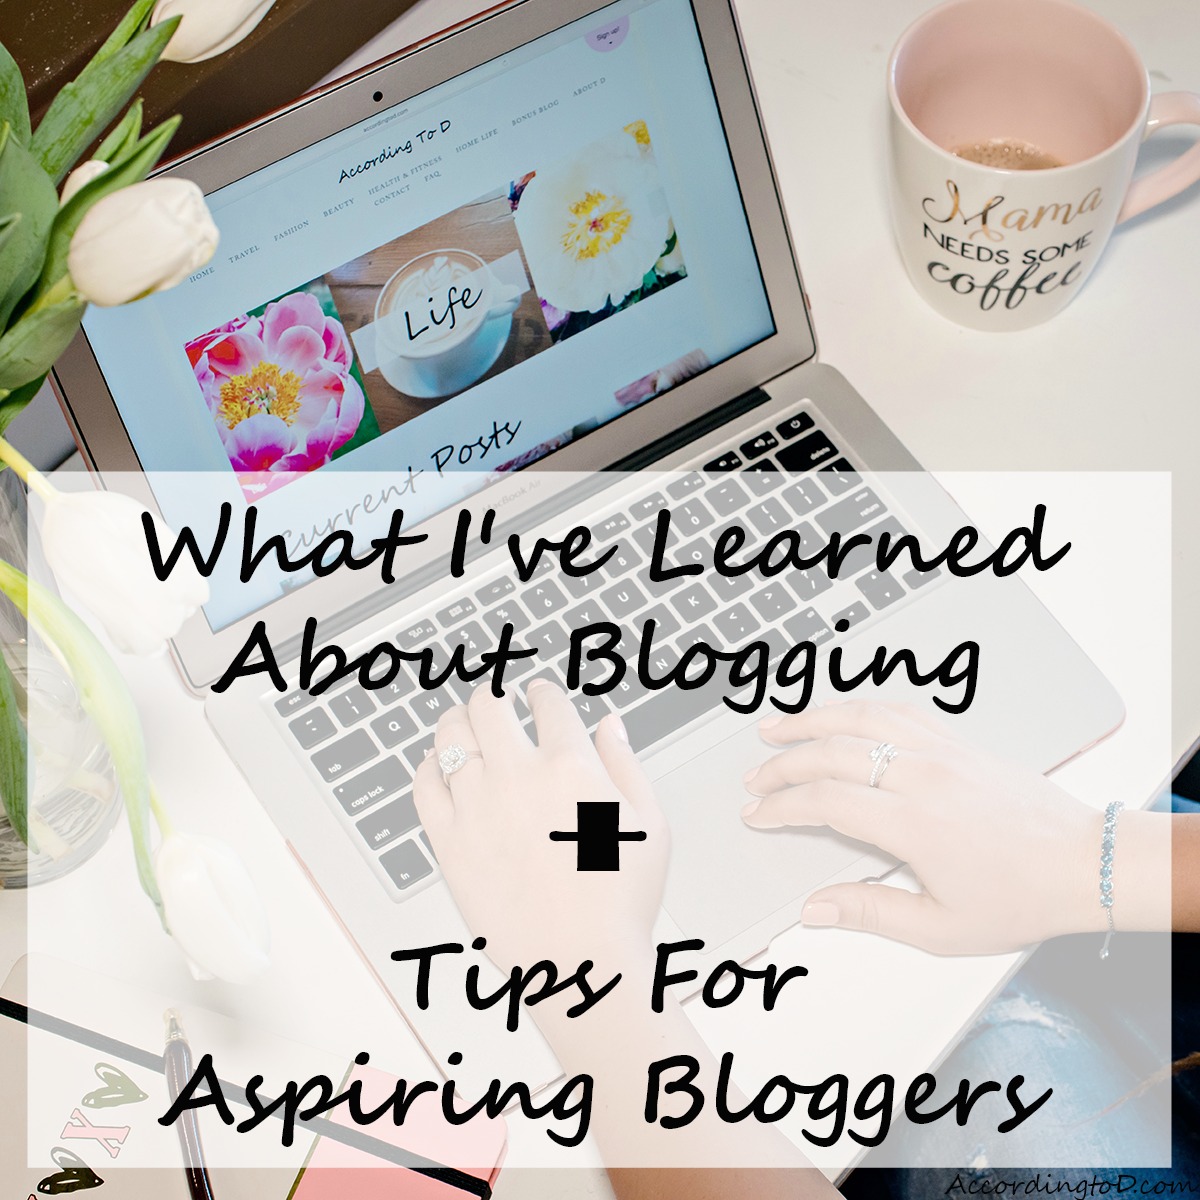 Tips for aspiring bloggers